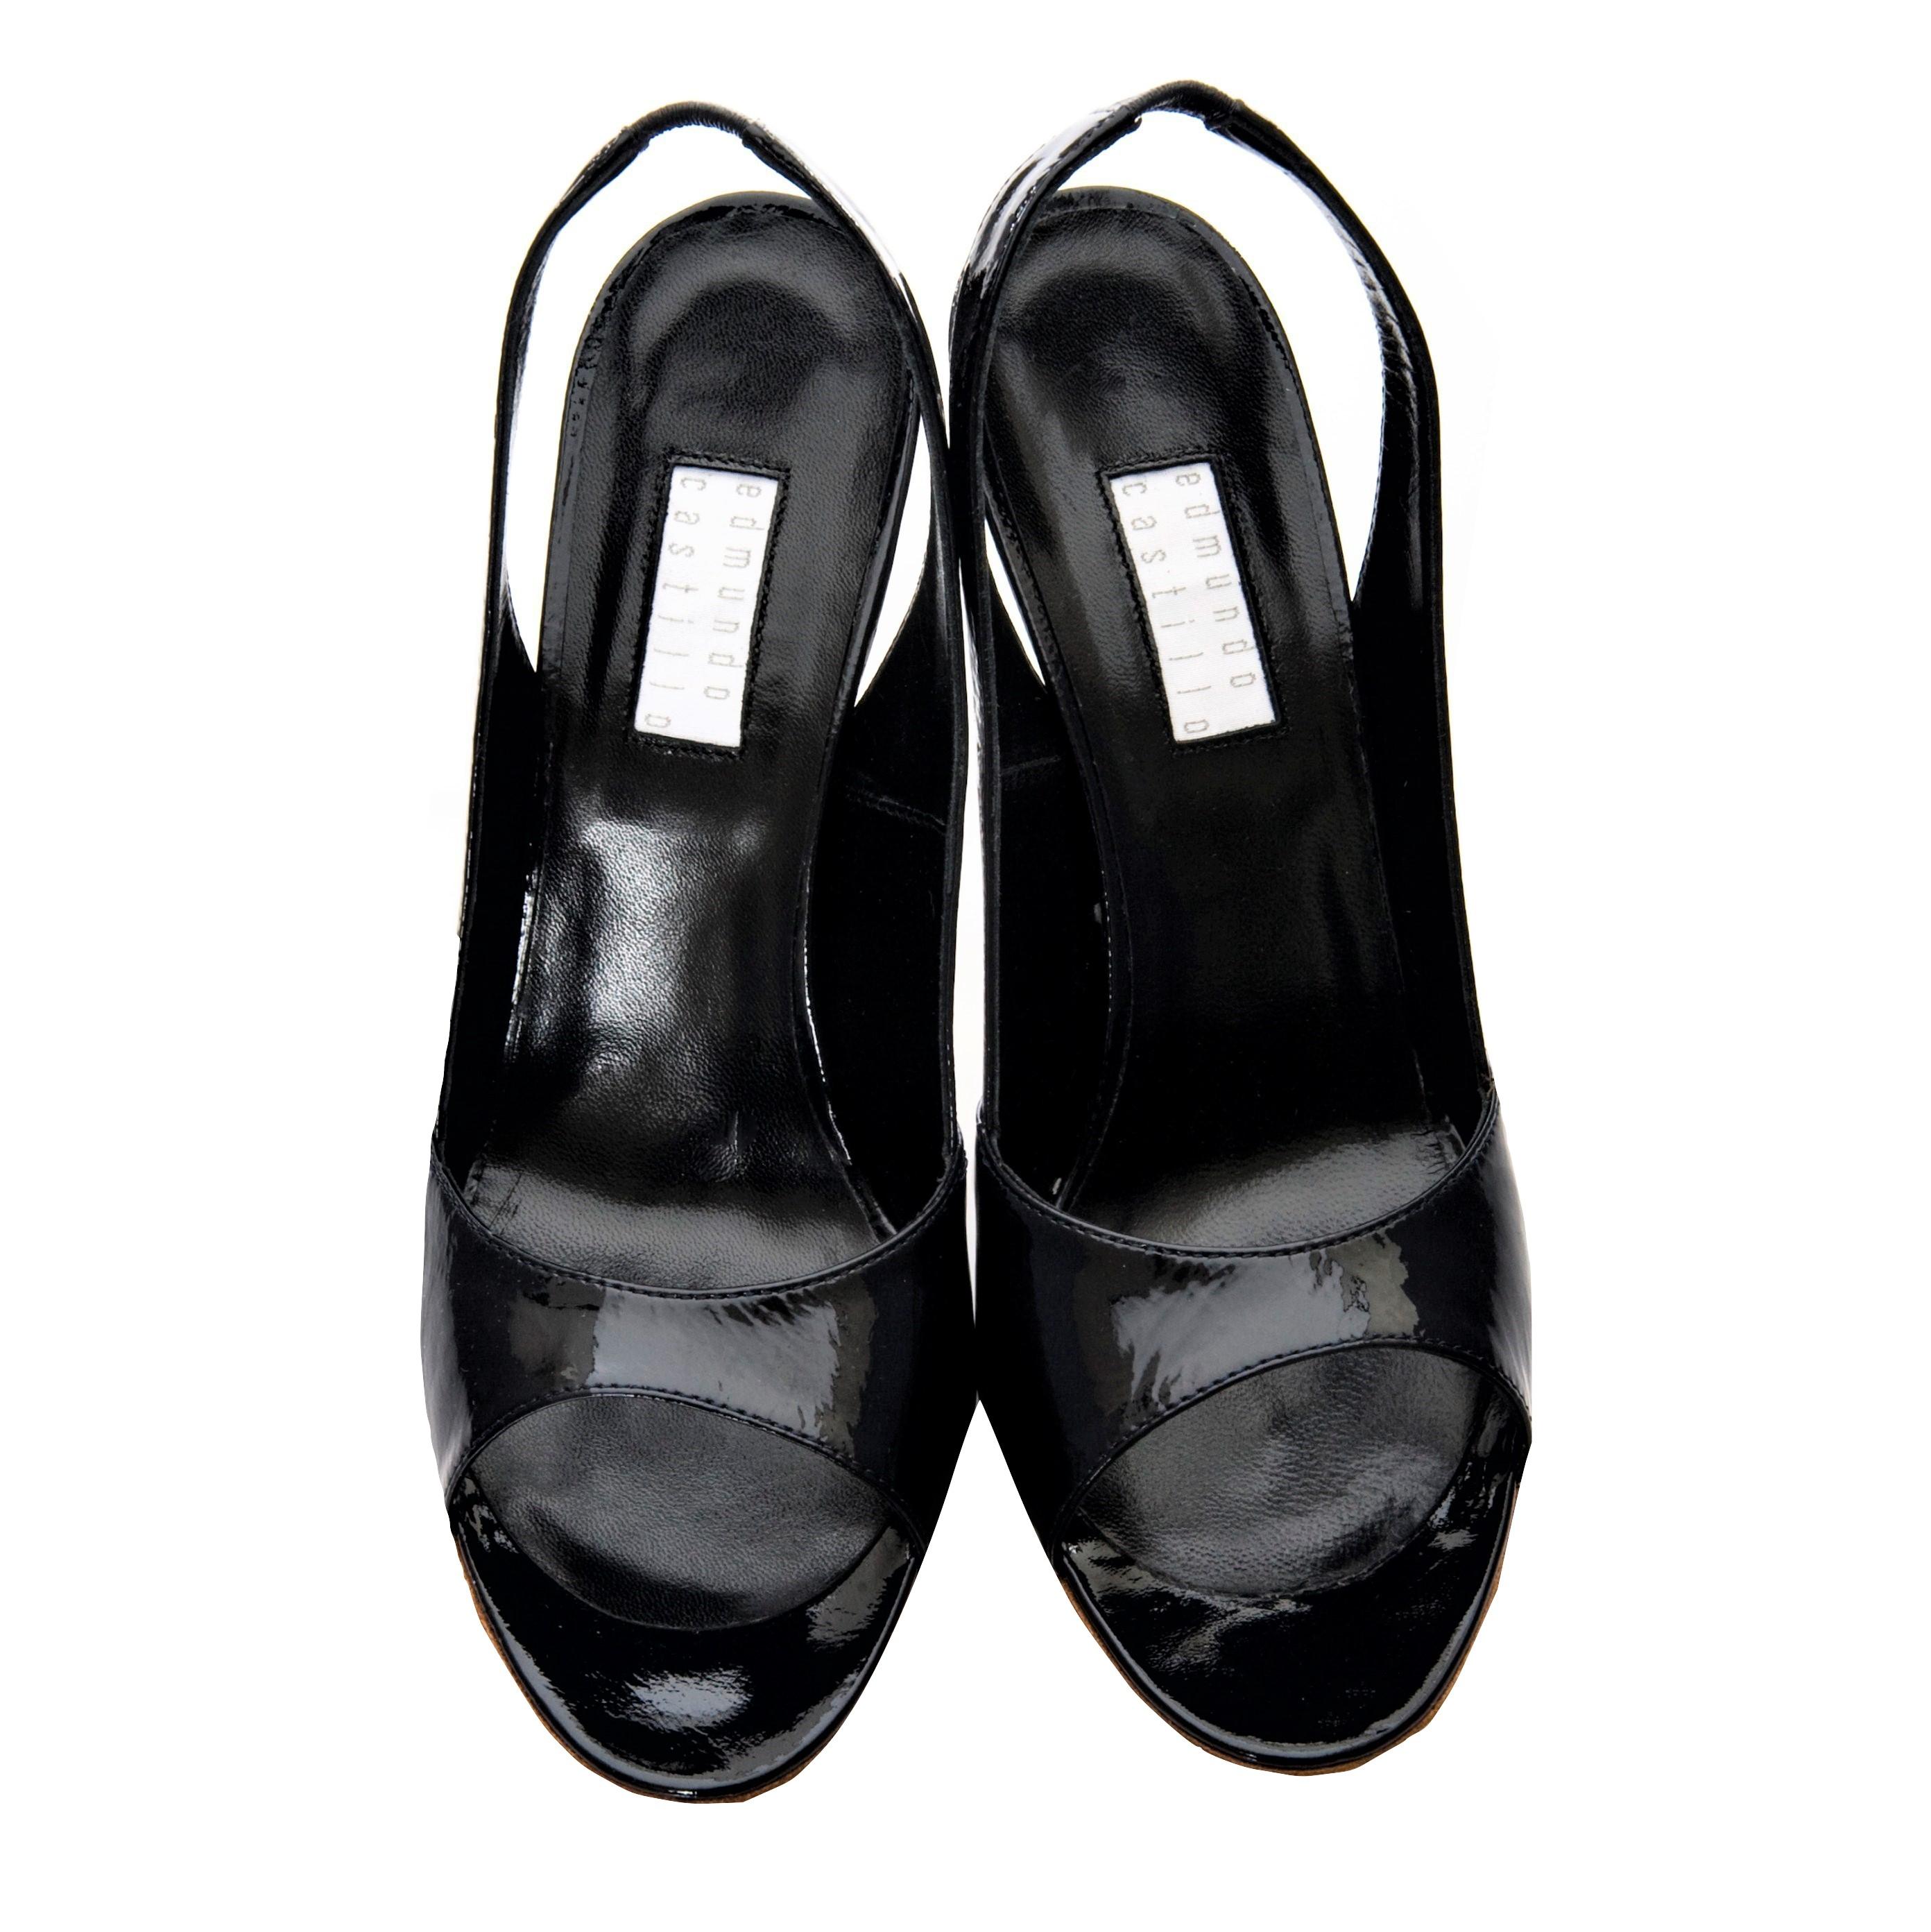 New Edmundo Castillo Black Patent Leather Sling Heels 2